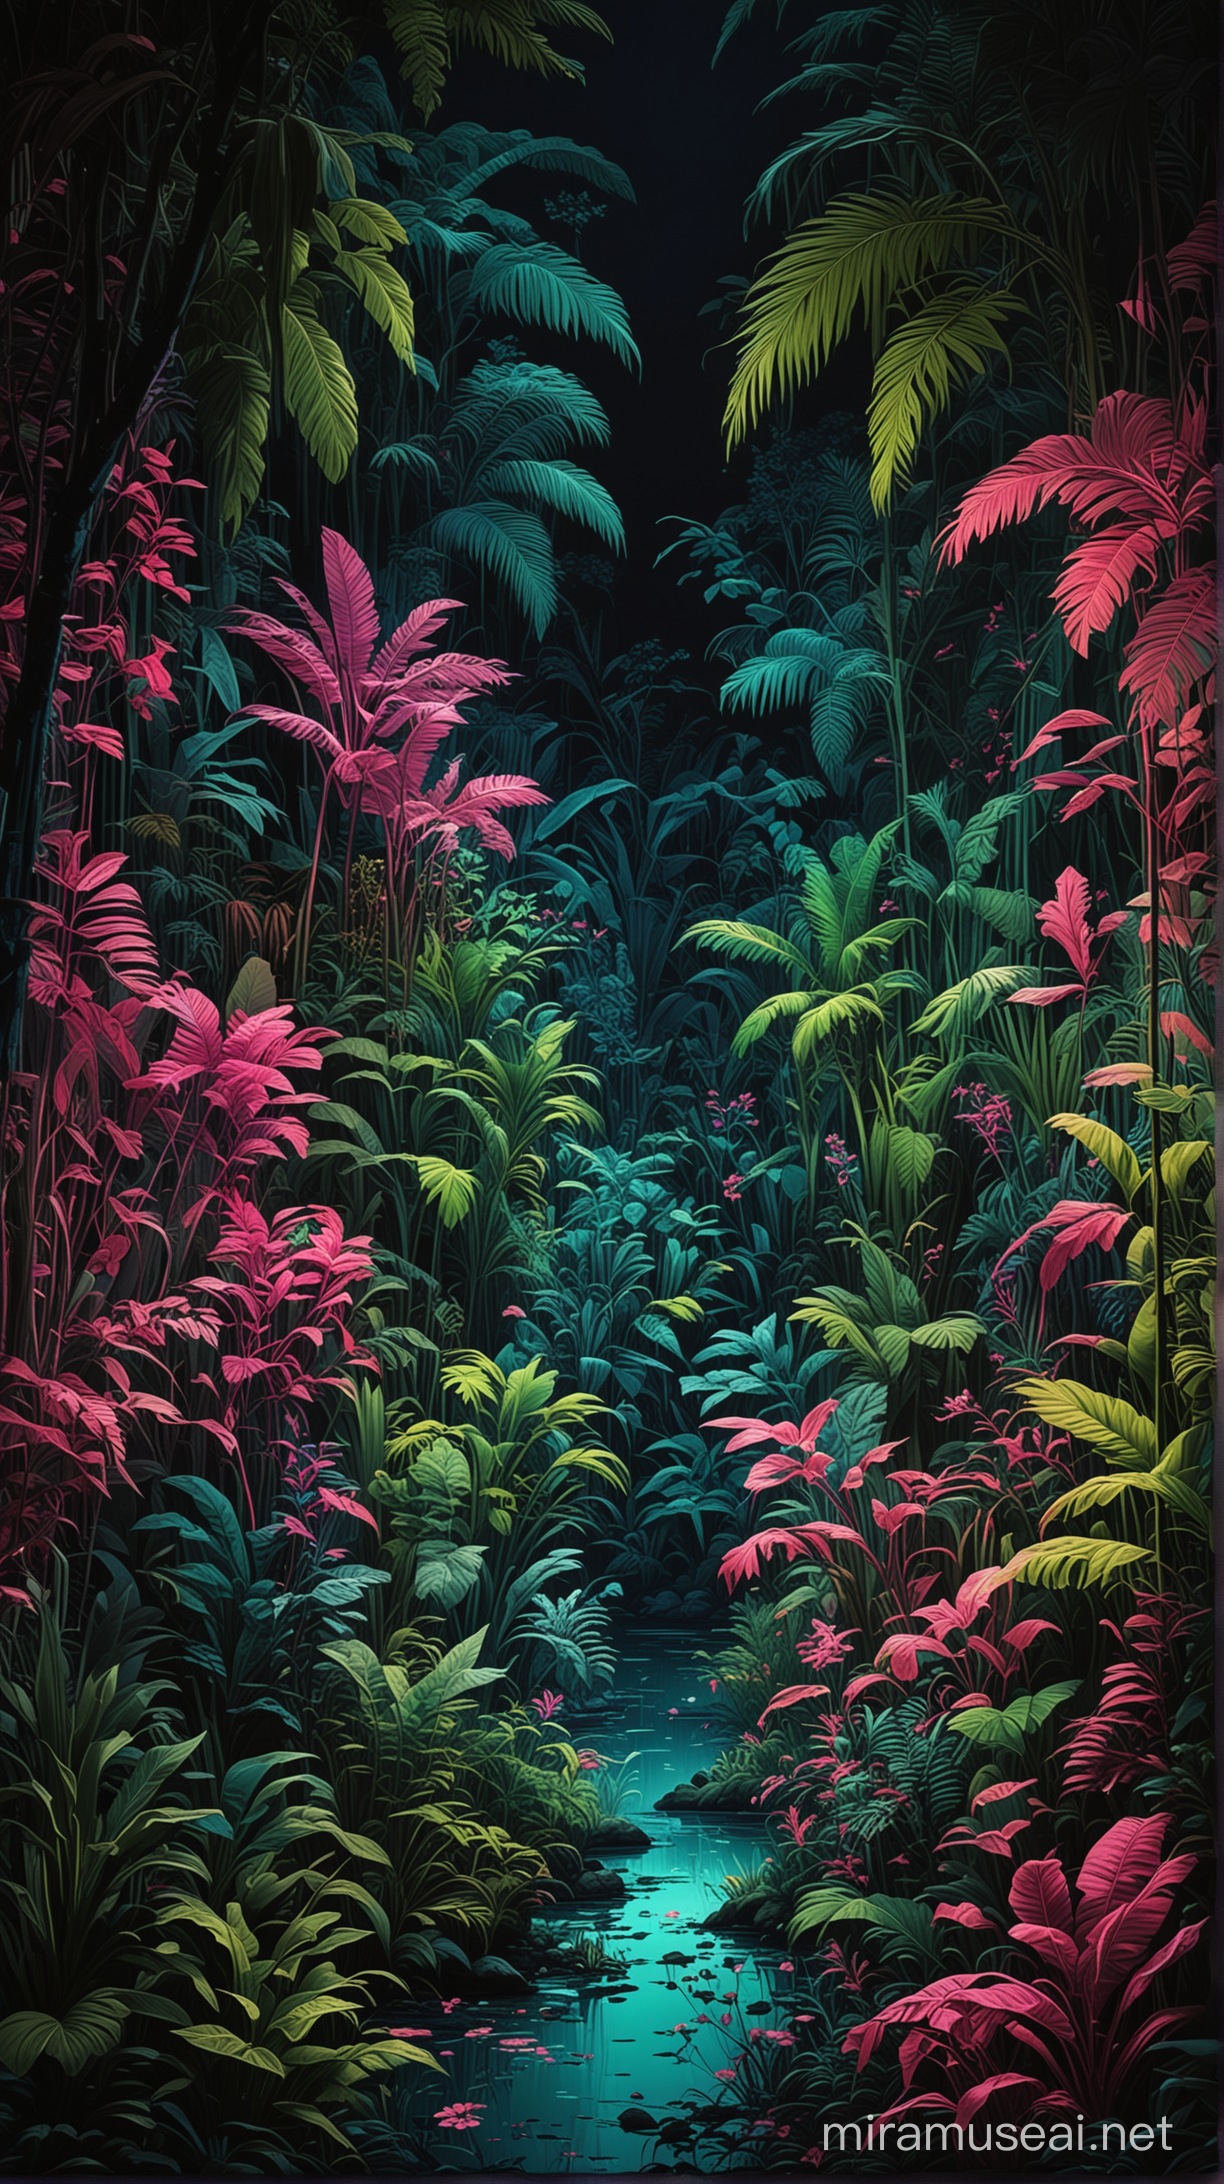 Vibrant Neon Jungle Night Exotic Flora and Fauna Illuminated